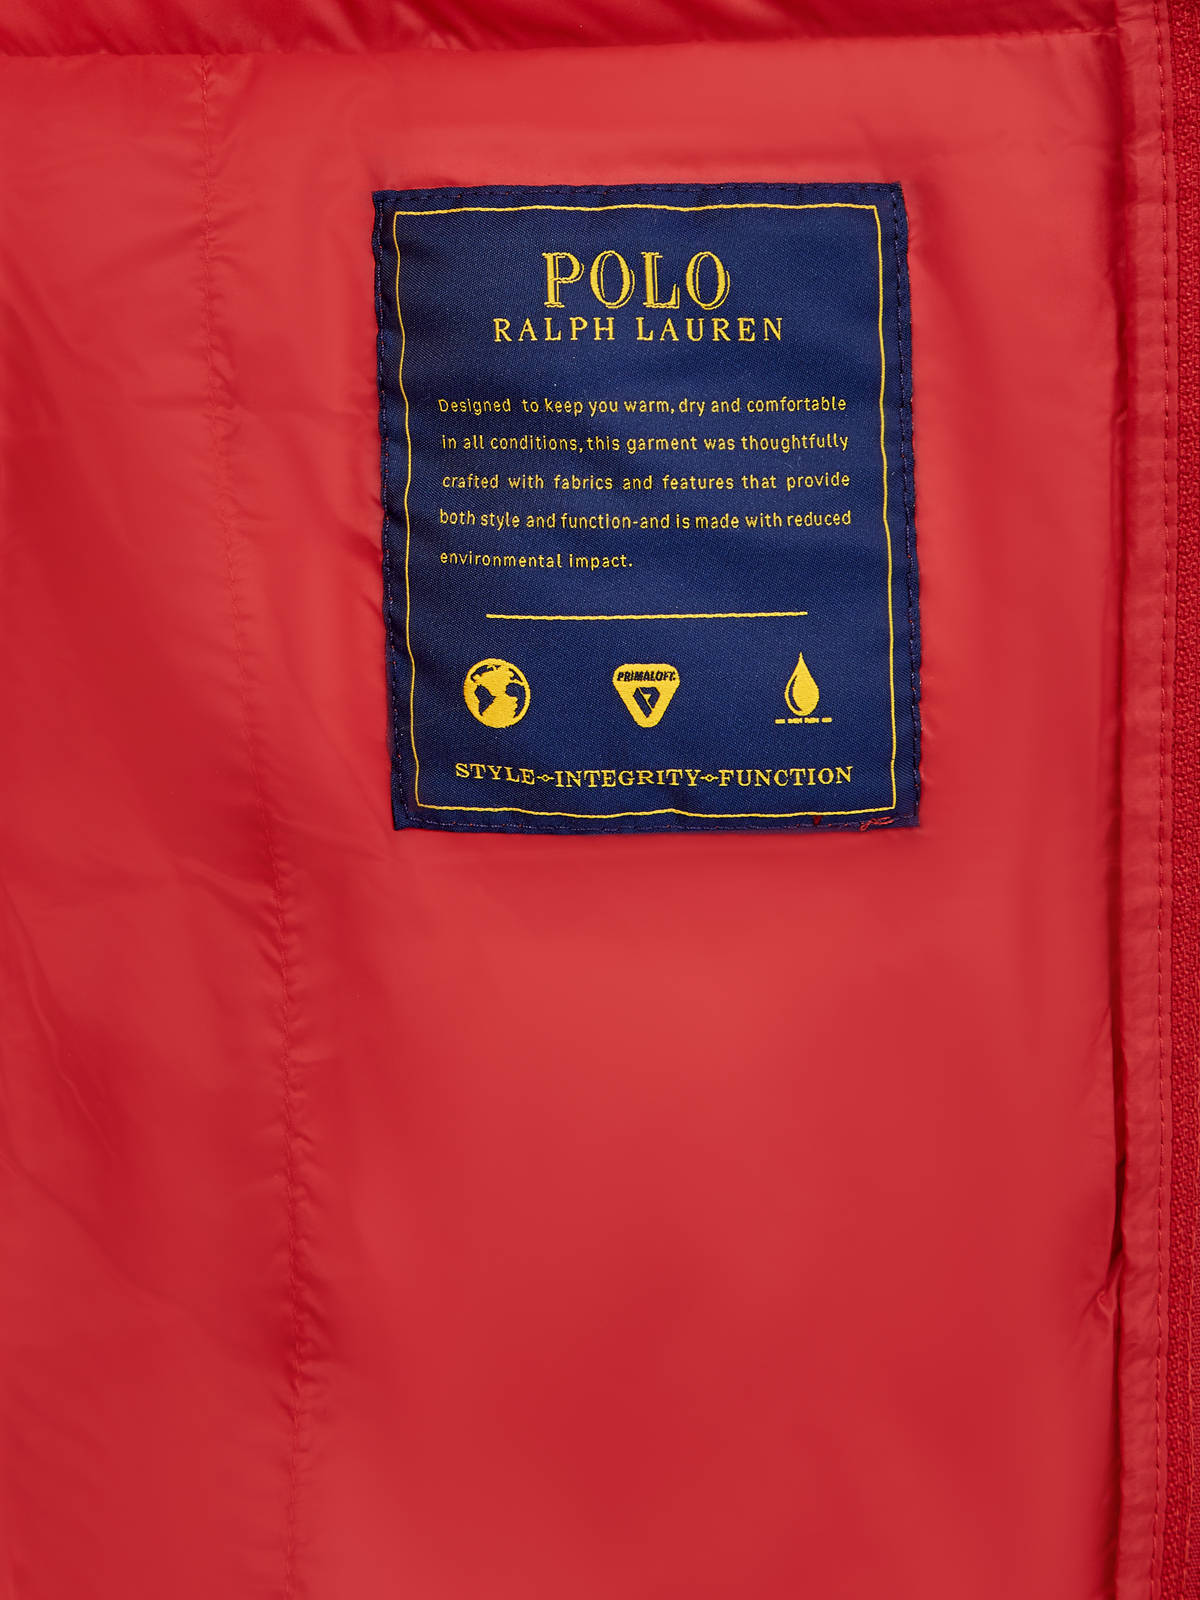 Компактная куртка из нейлона PrimaLoft® ThermoPlume™ POLO RALPH LAUREN, цвет красный, размер L;M;S - фото 6